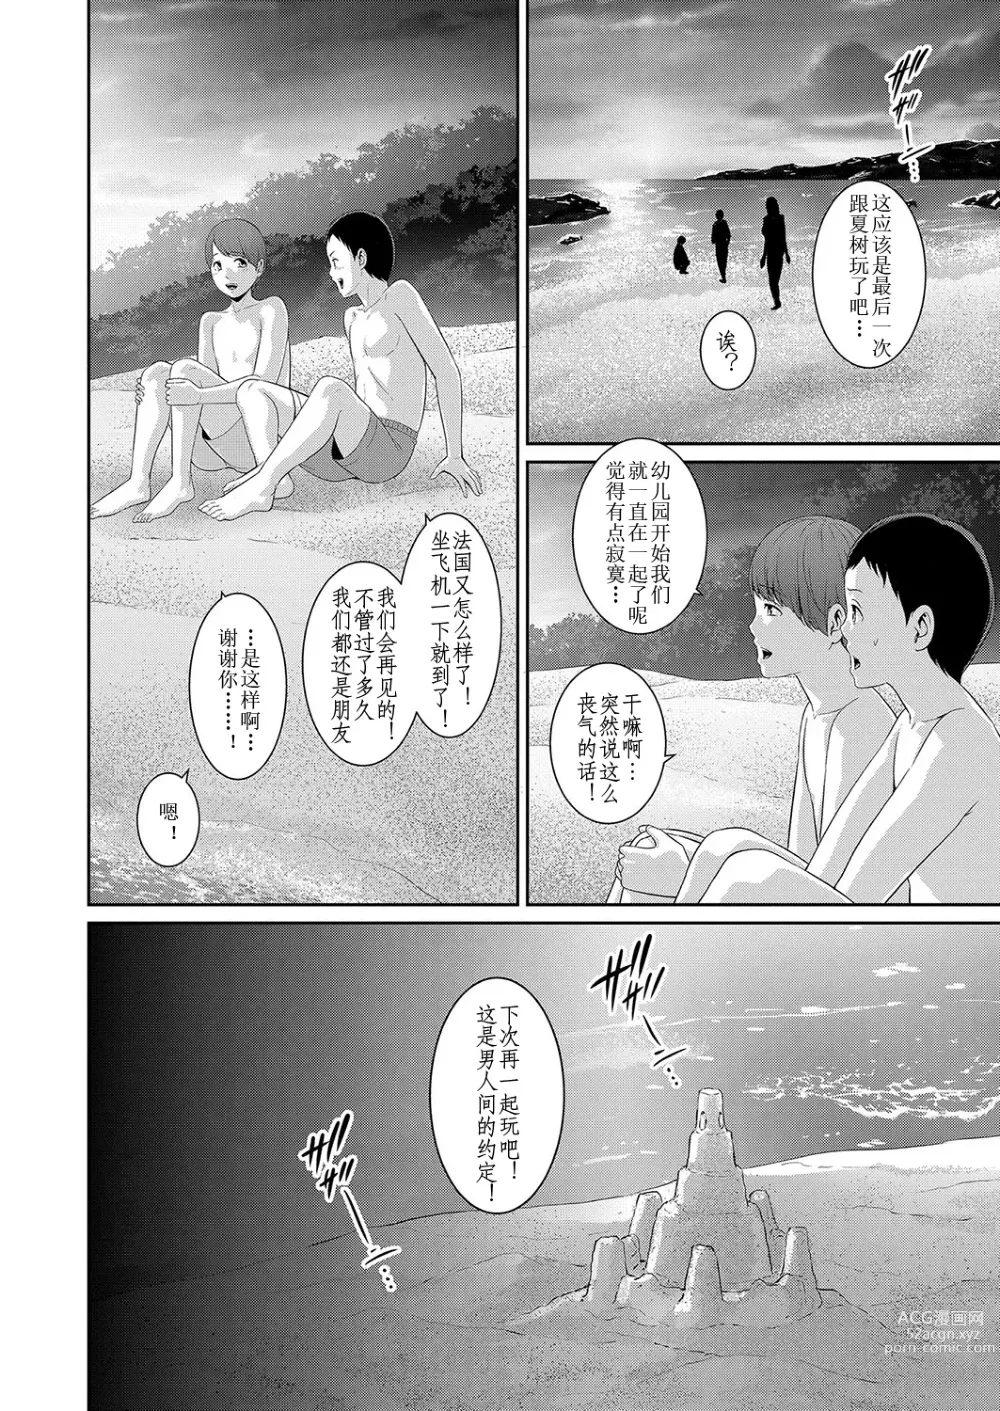 Page 4 of manga Shin Tomodachi no Hahaoya Ch. 4